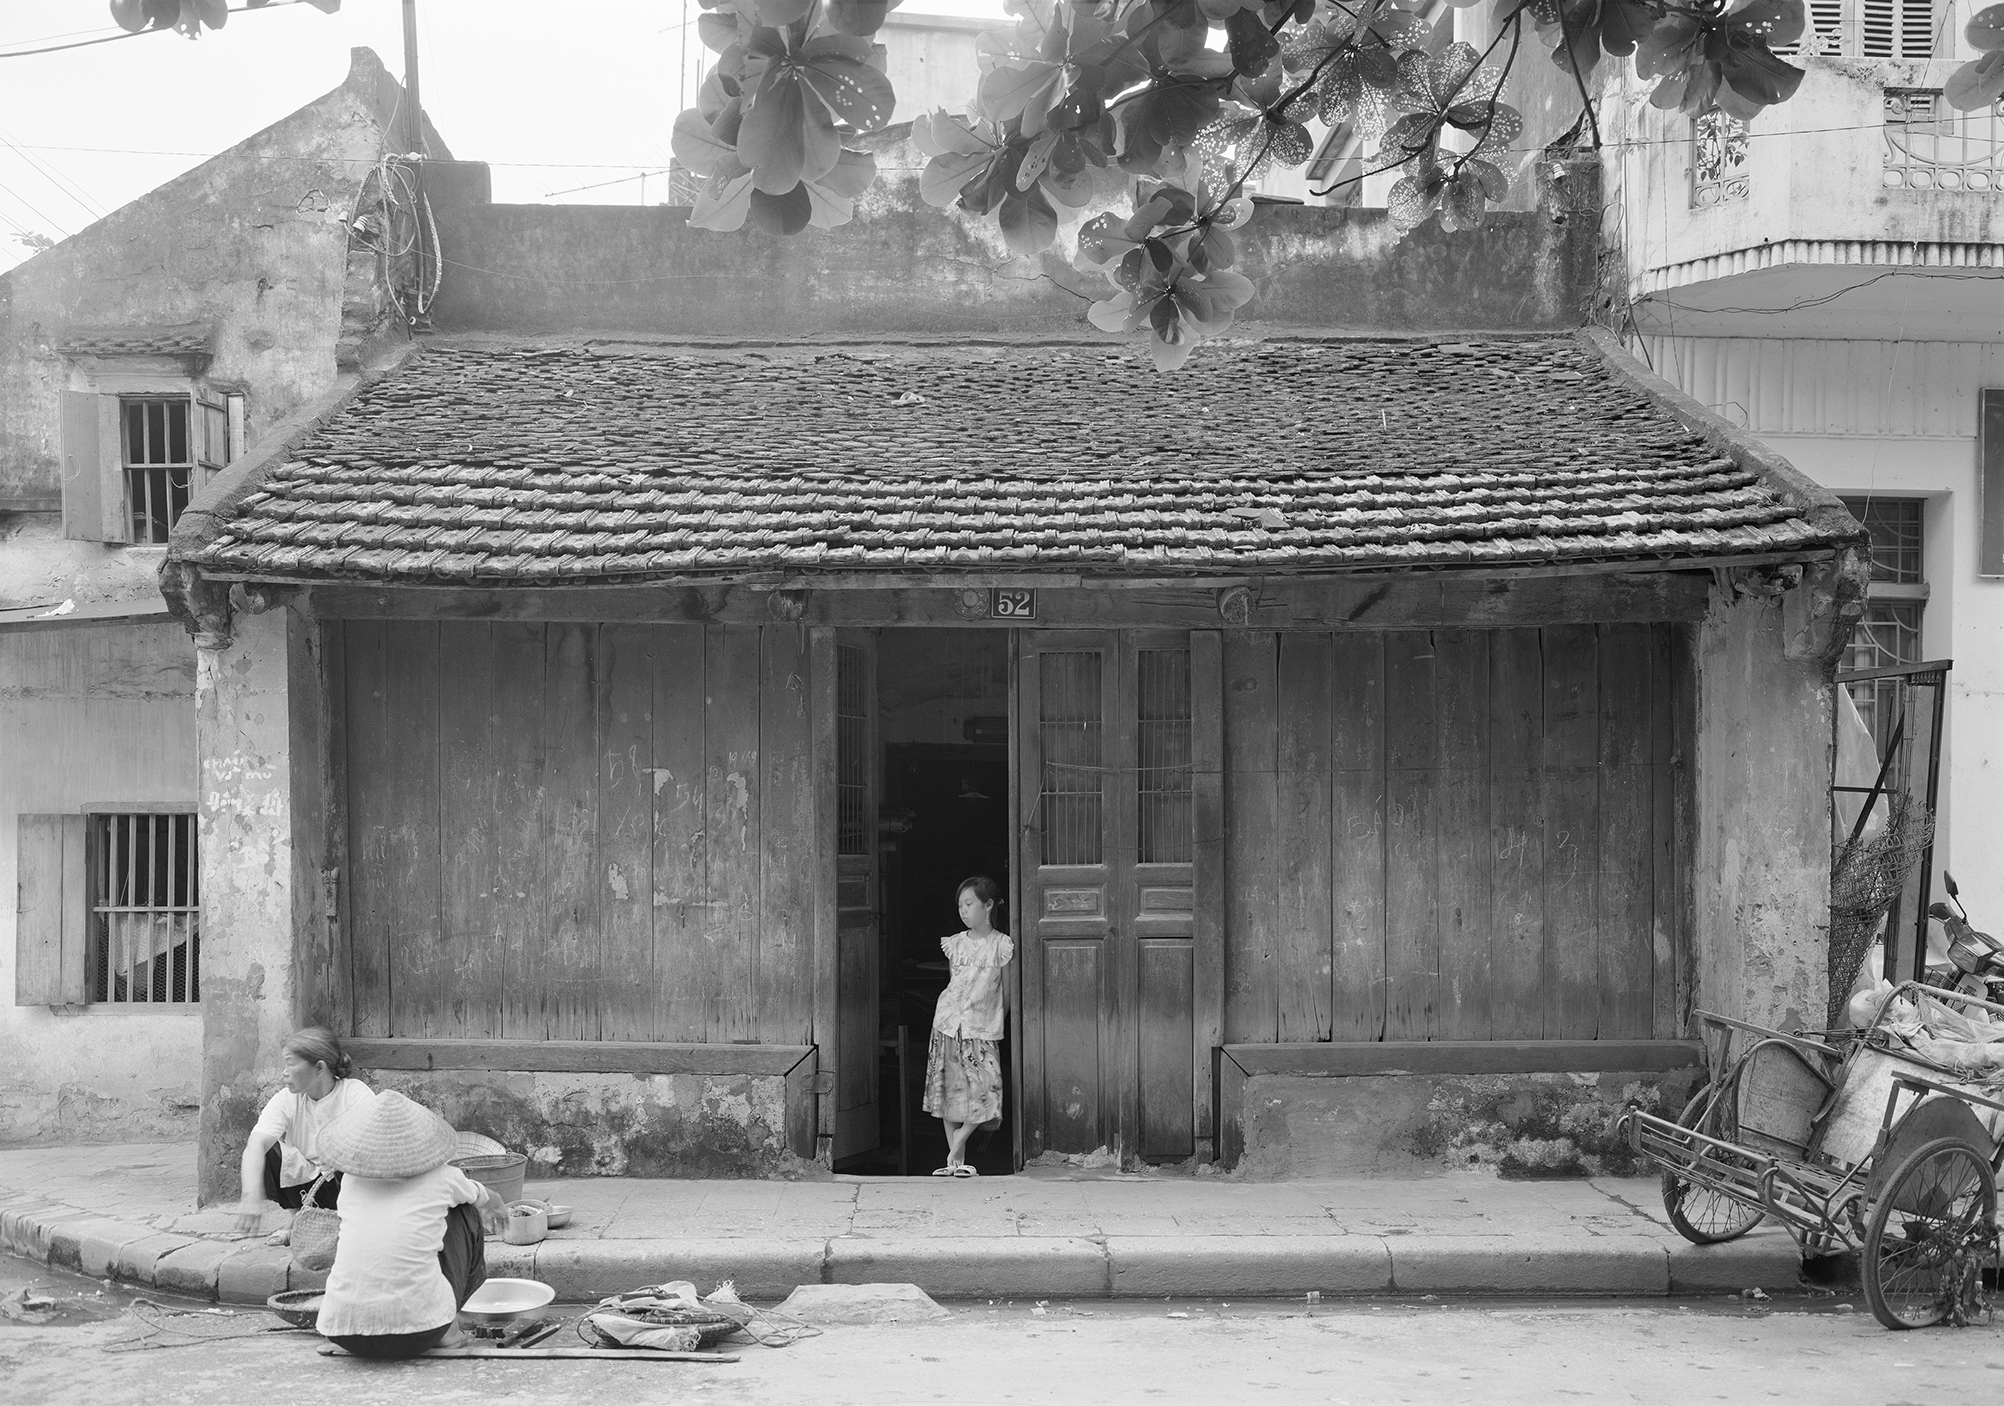 Untitled, Hanoi, 1994